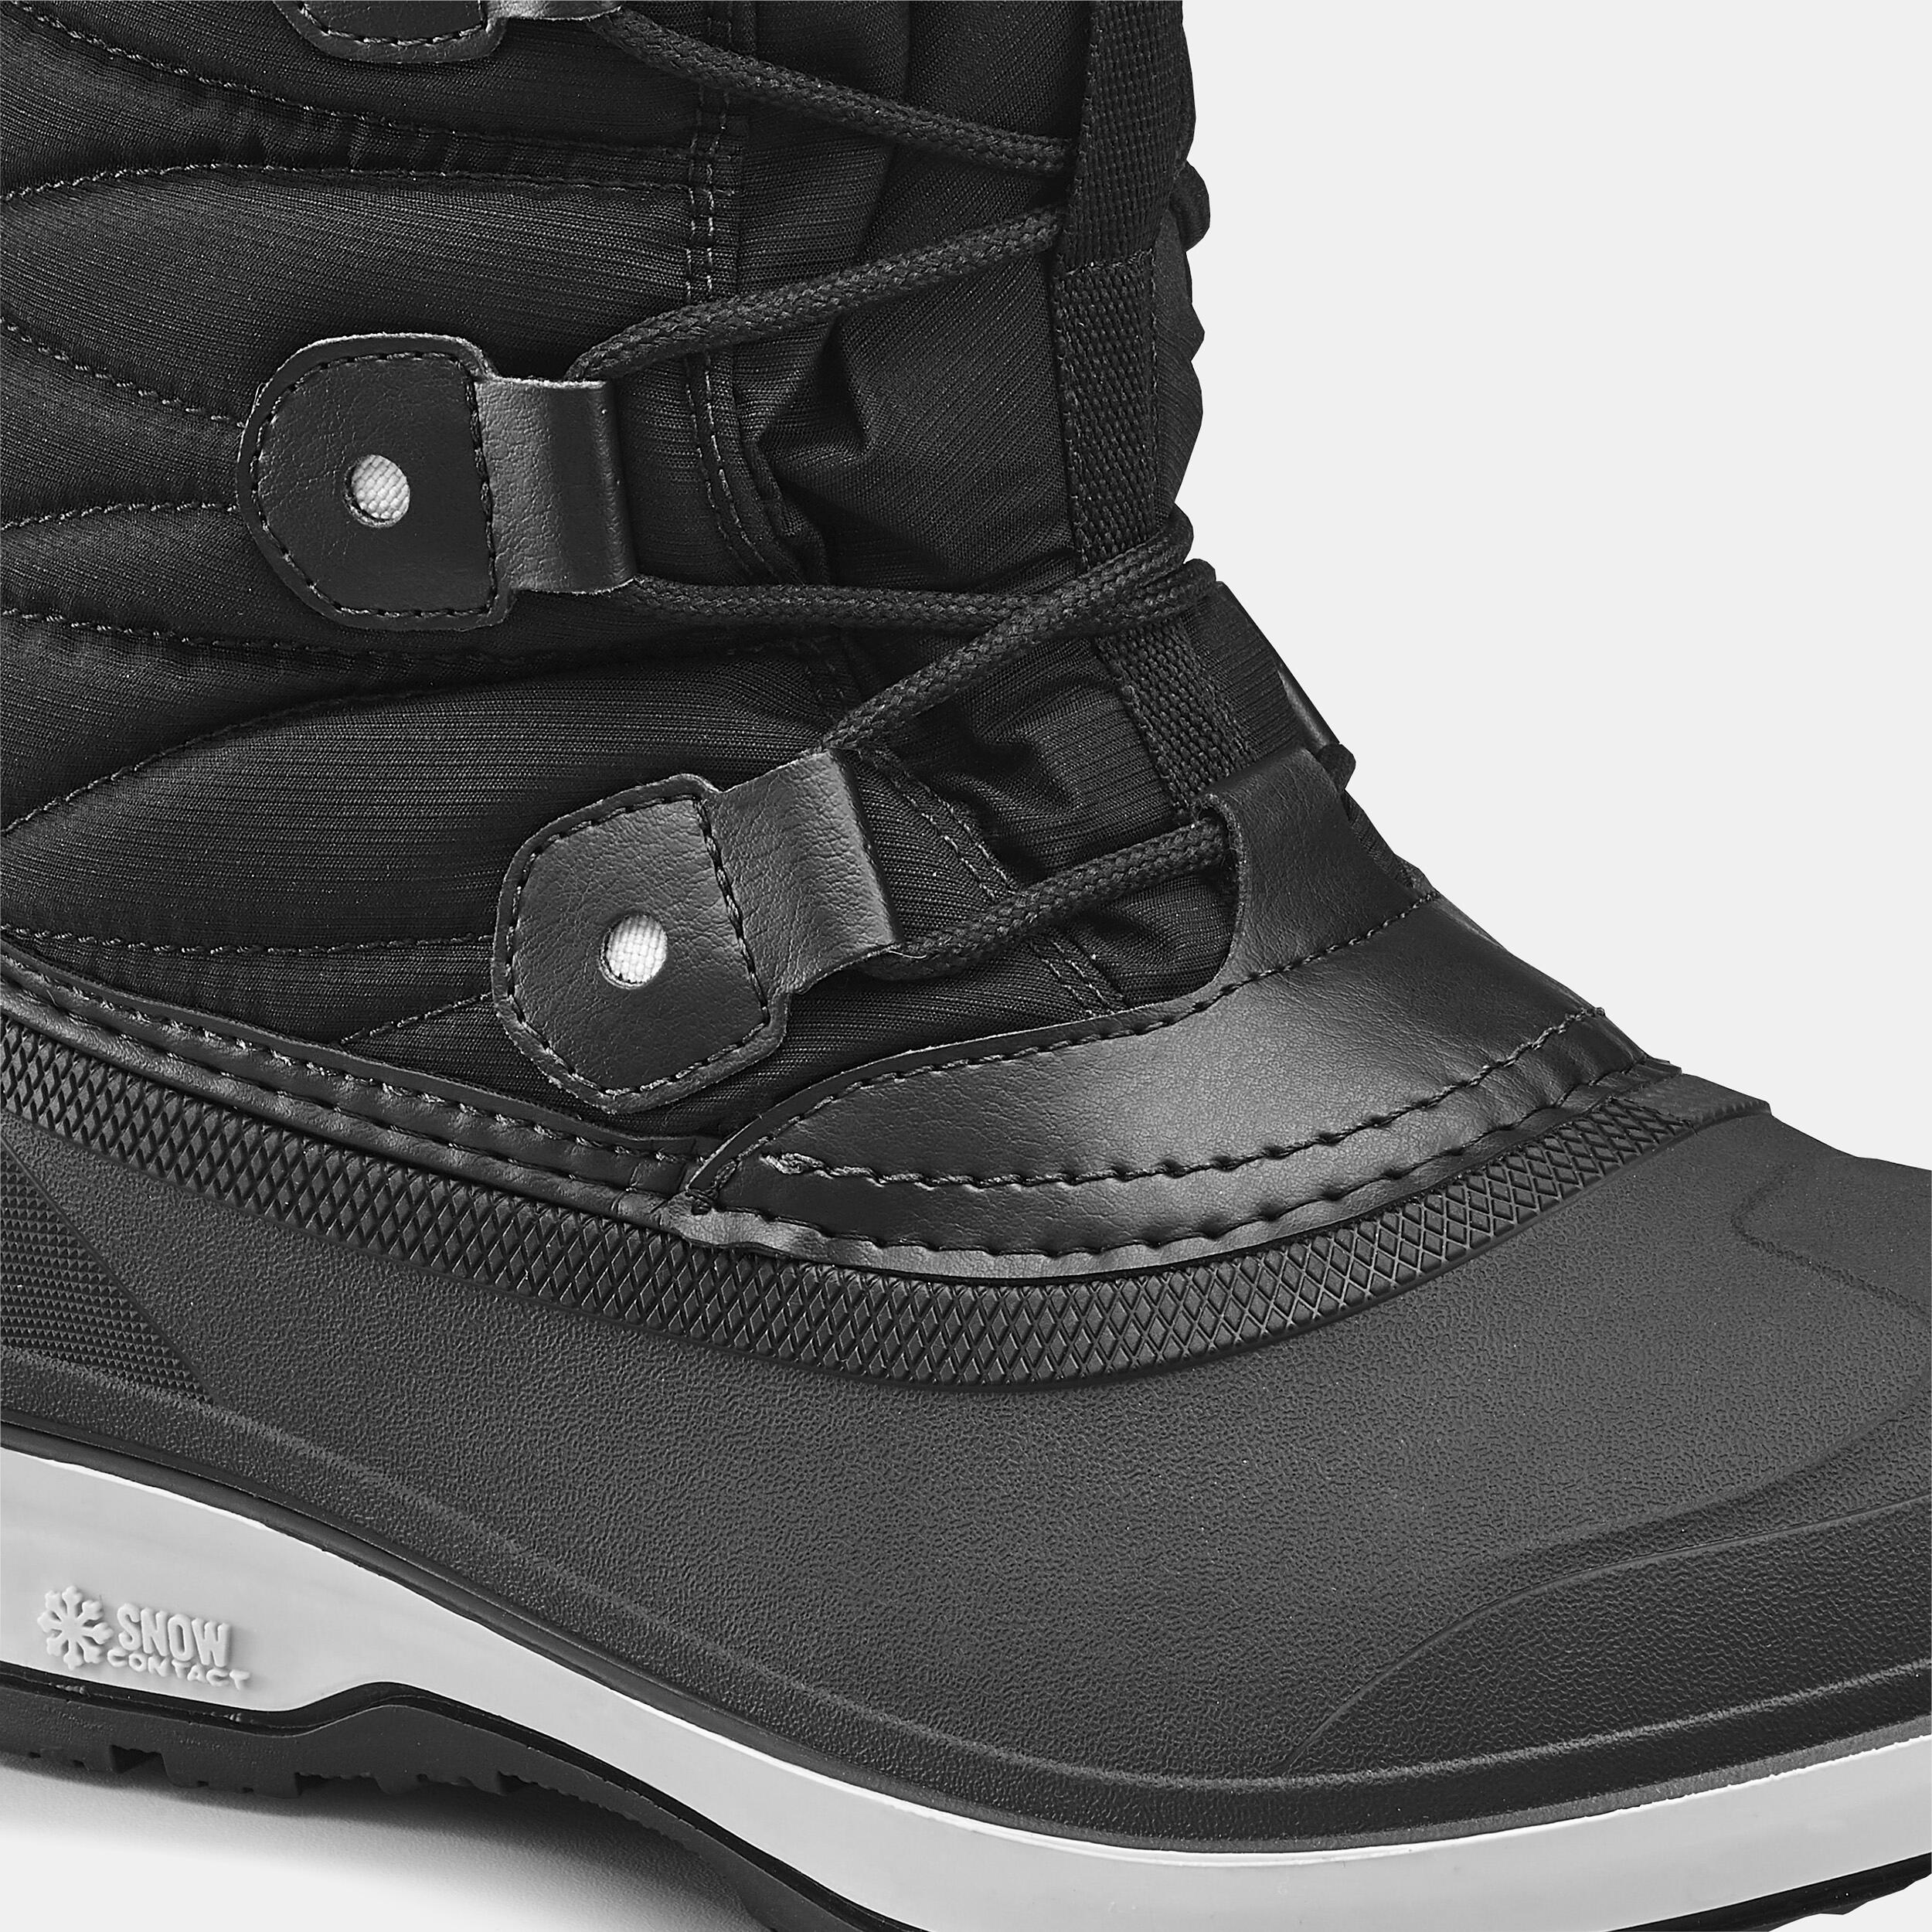 Women's waterproof warm snow boots - SH500 high boot  7/7